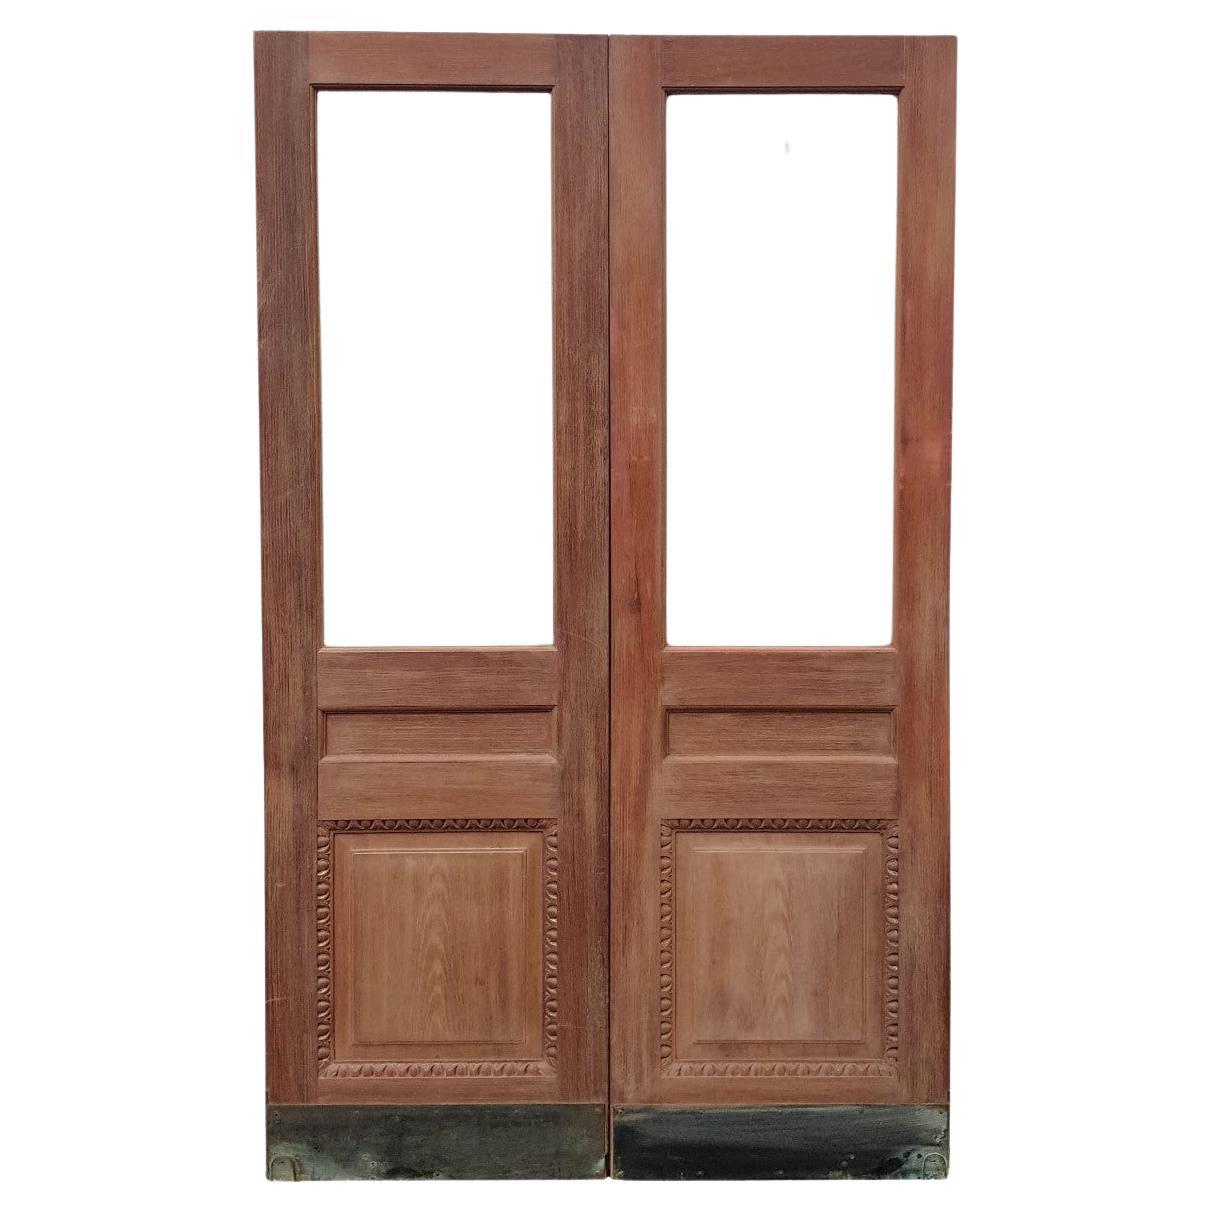 Antique Glazed Double Doors For Sale